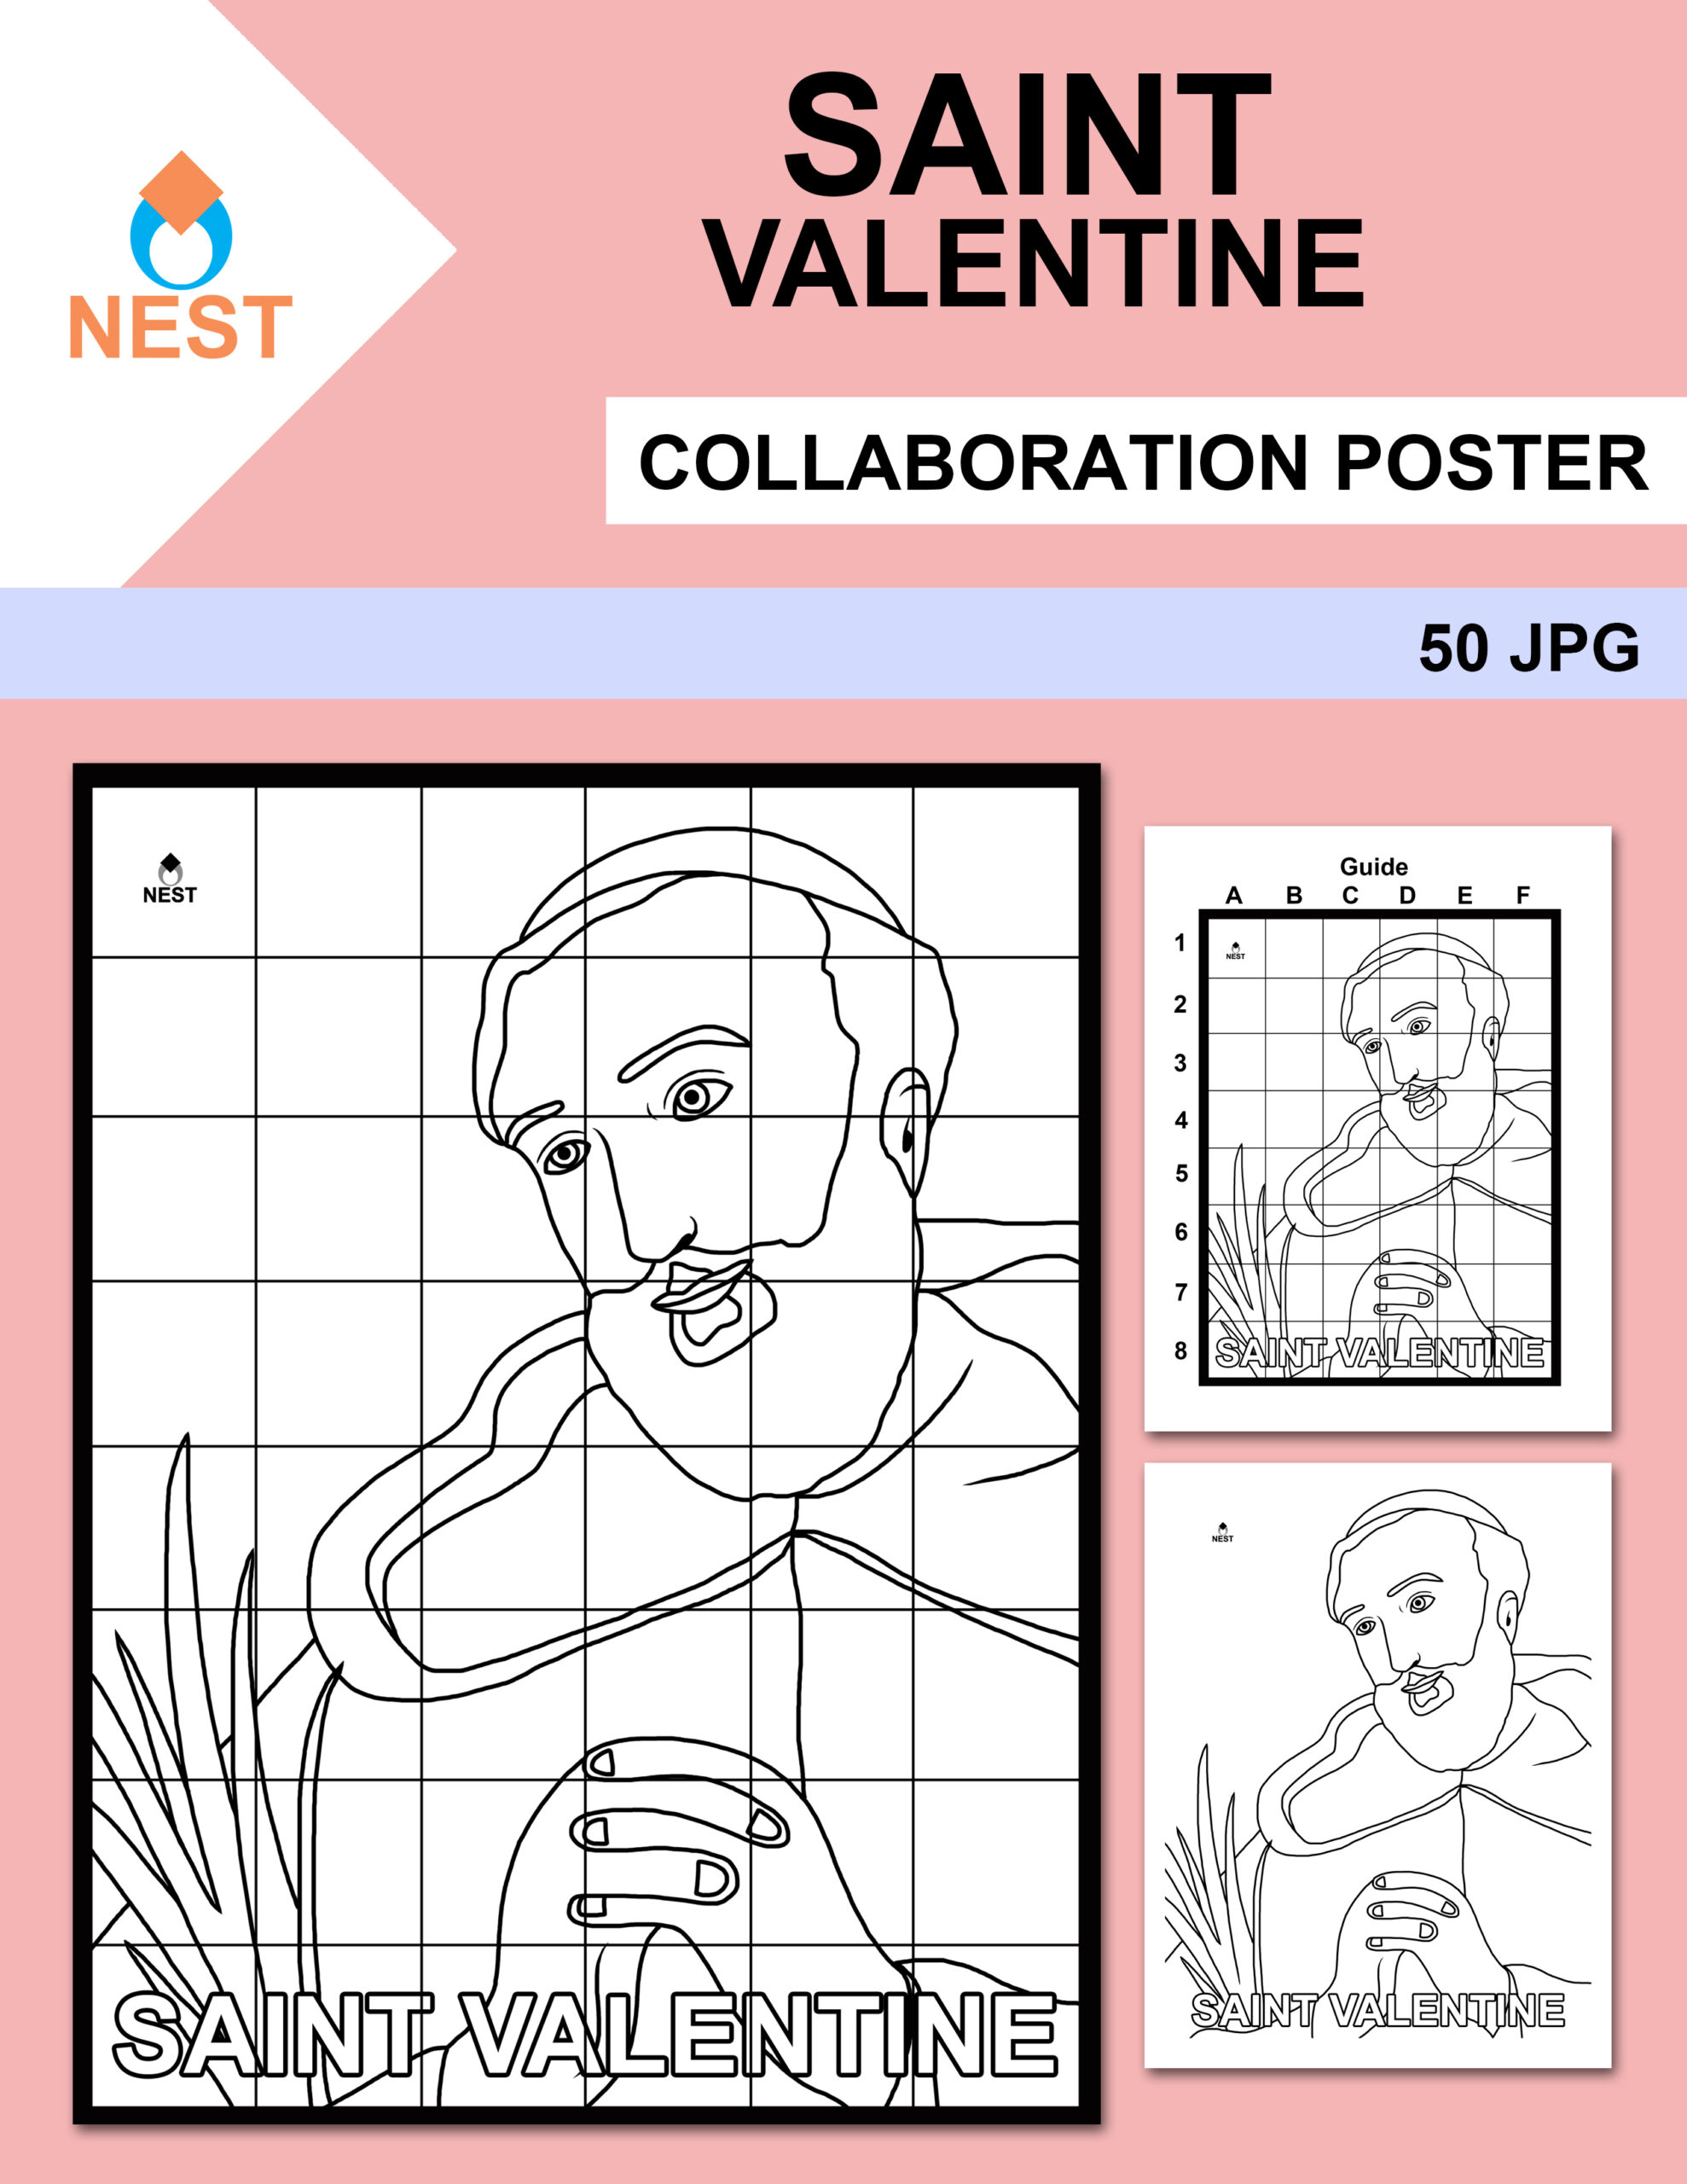 Saint valentine collaboration poster made by teachers